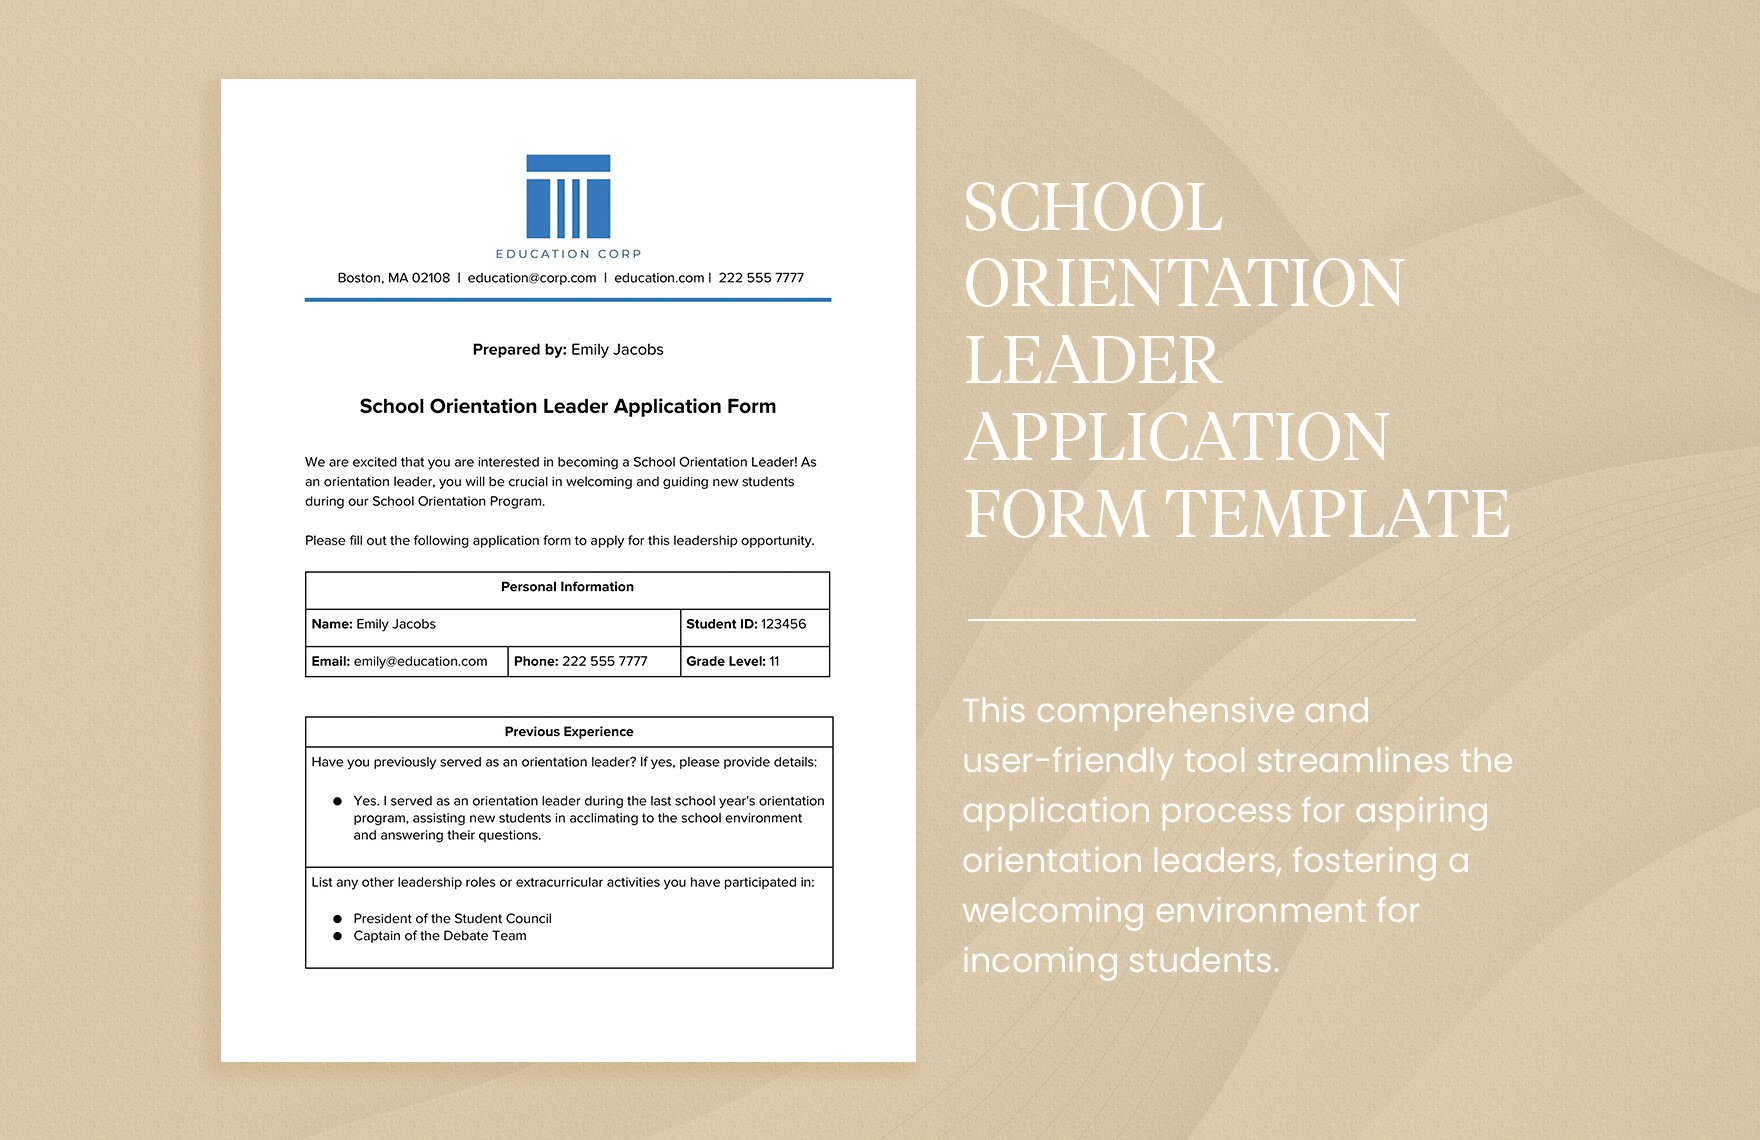 School Orientation Leader Application Form Template